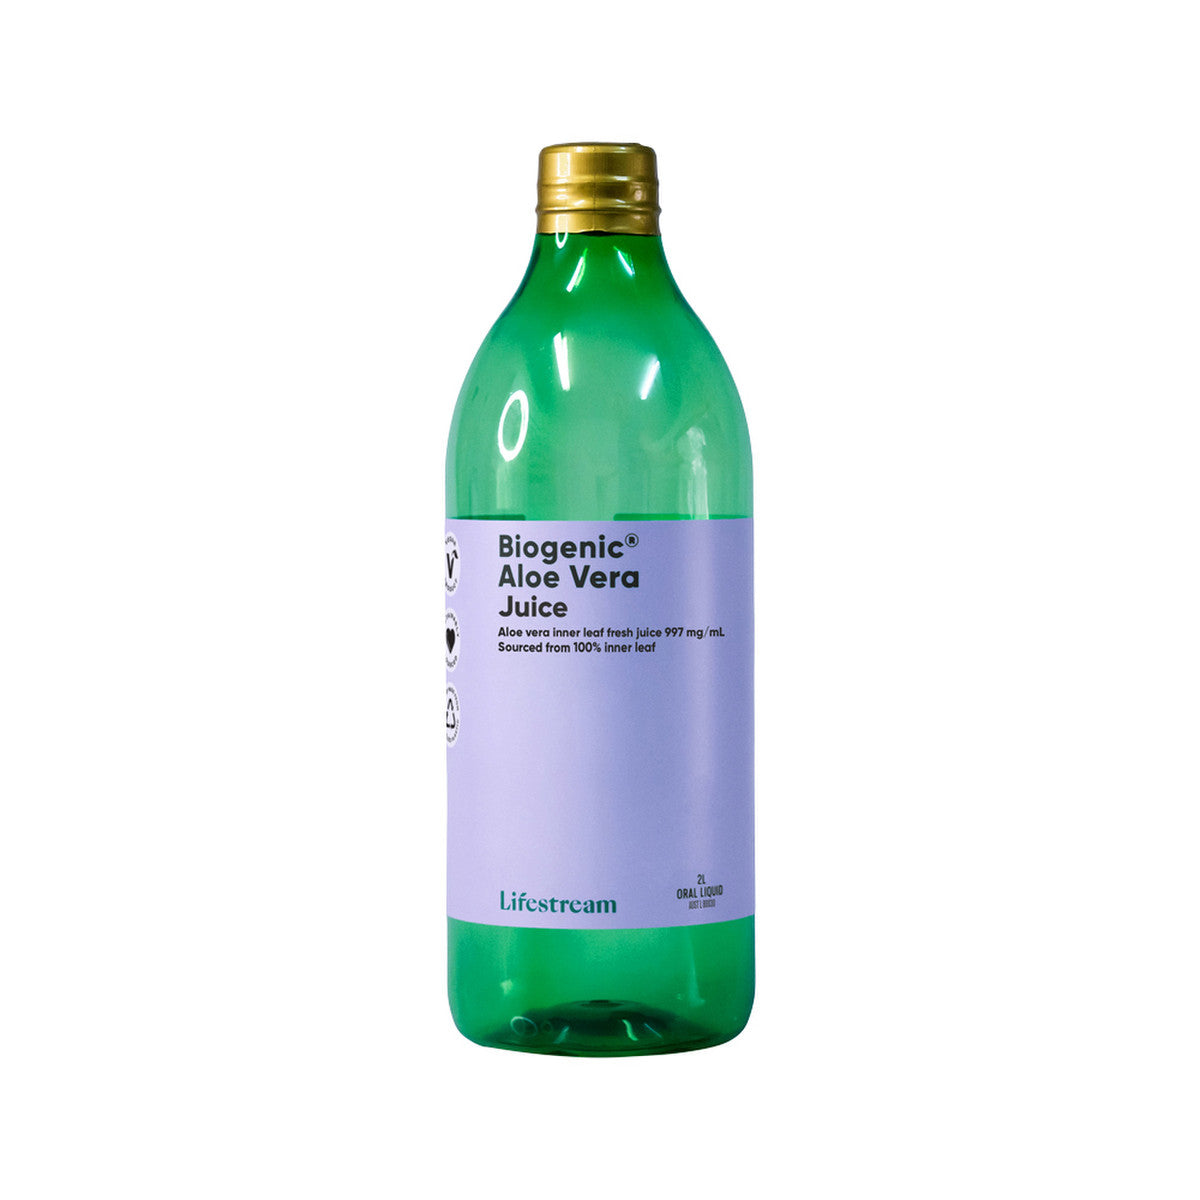 Lifestream - Biogenic Aloe Vera Juice